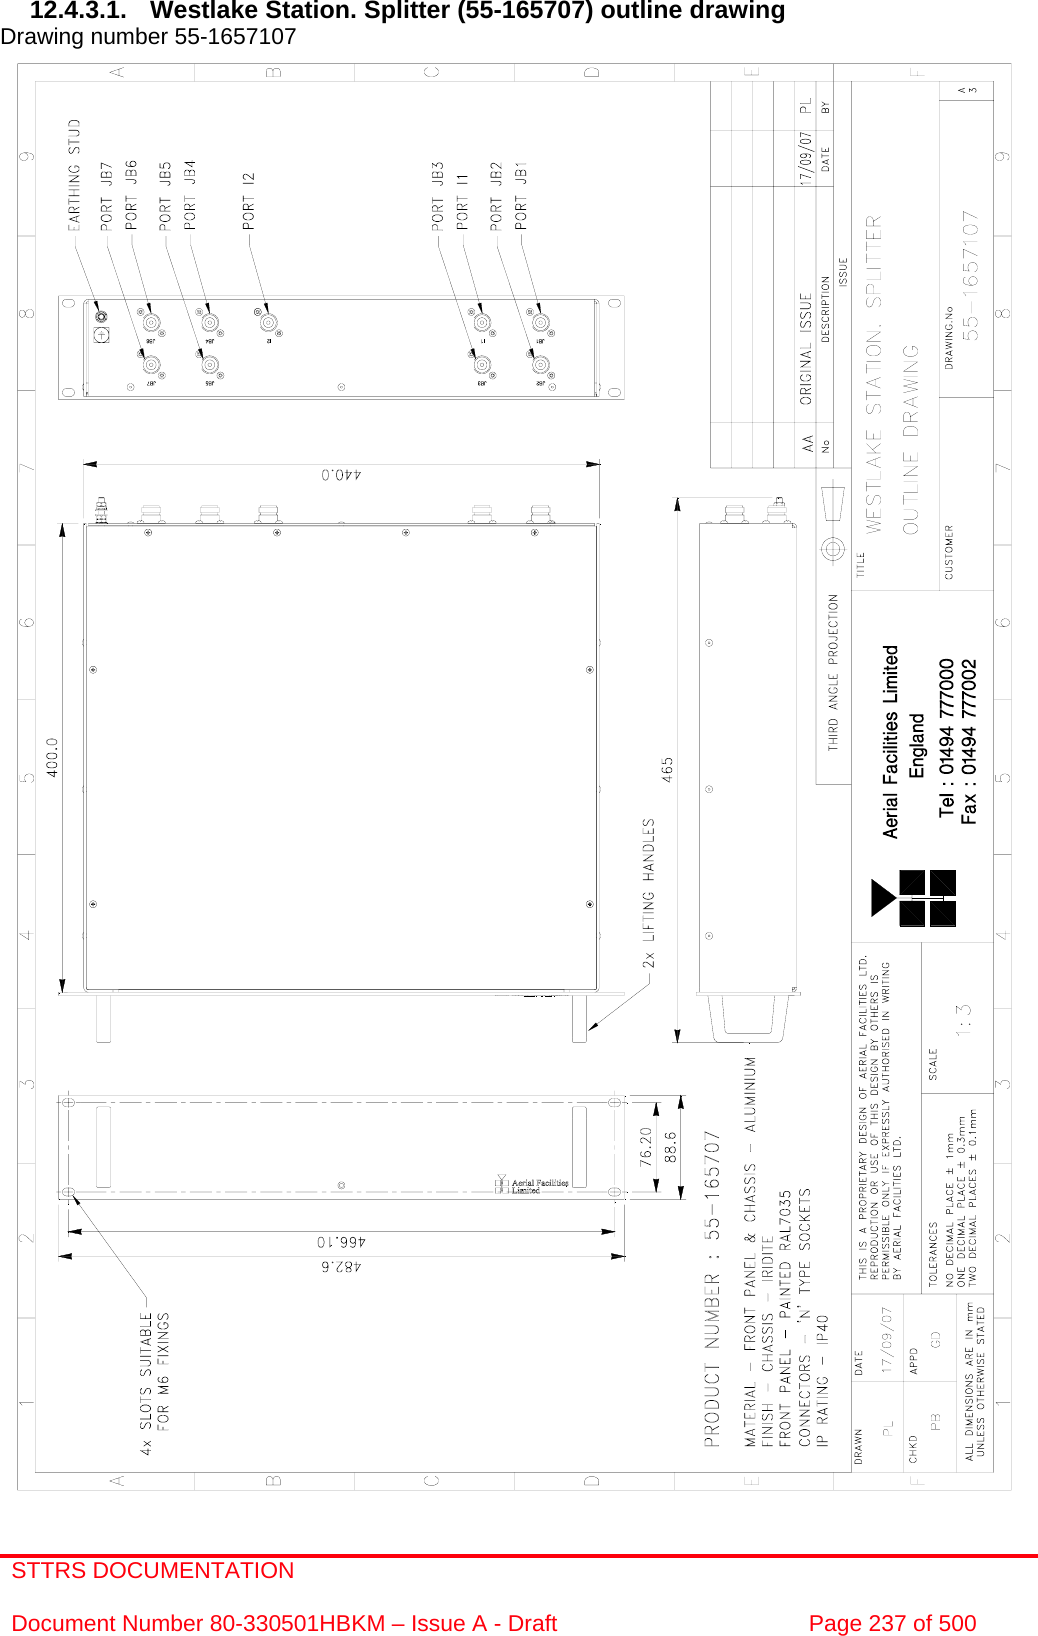 STTRS DOCUMENTATION  Document Number 80-330501HBKM – Issue A - Draft  Page 237 of 500   12.4.3.1. Westlake Station. Splitter (55-165707) outline drawing  Drawing number 55-1657107                                                       